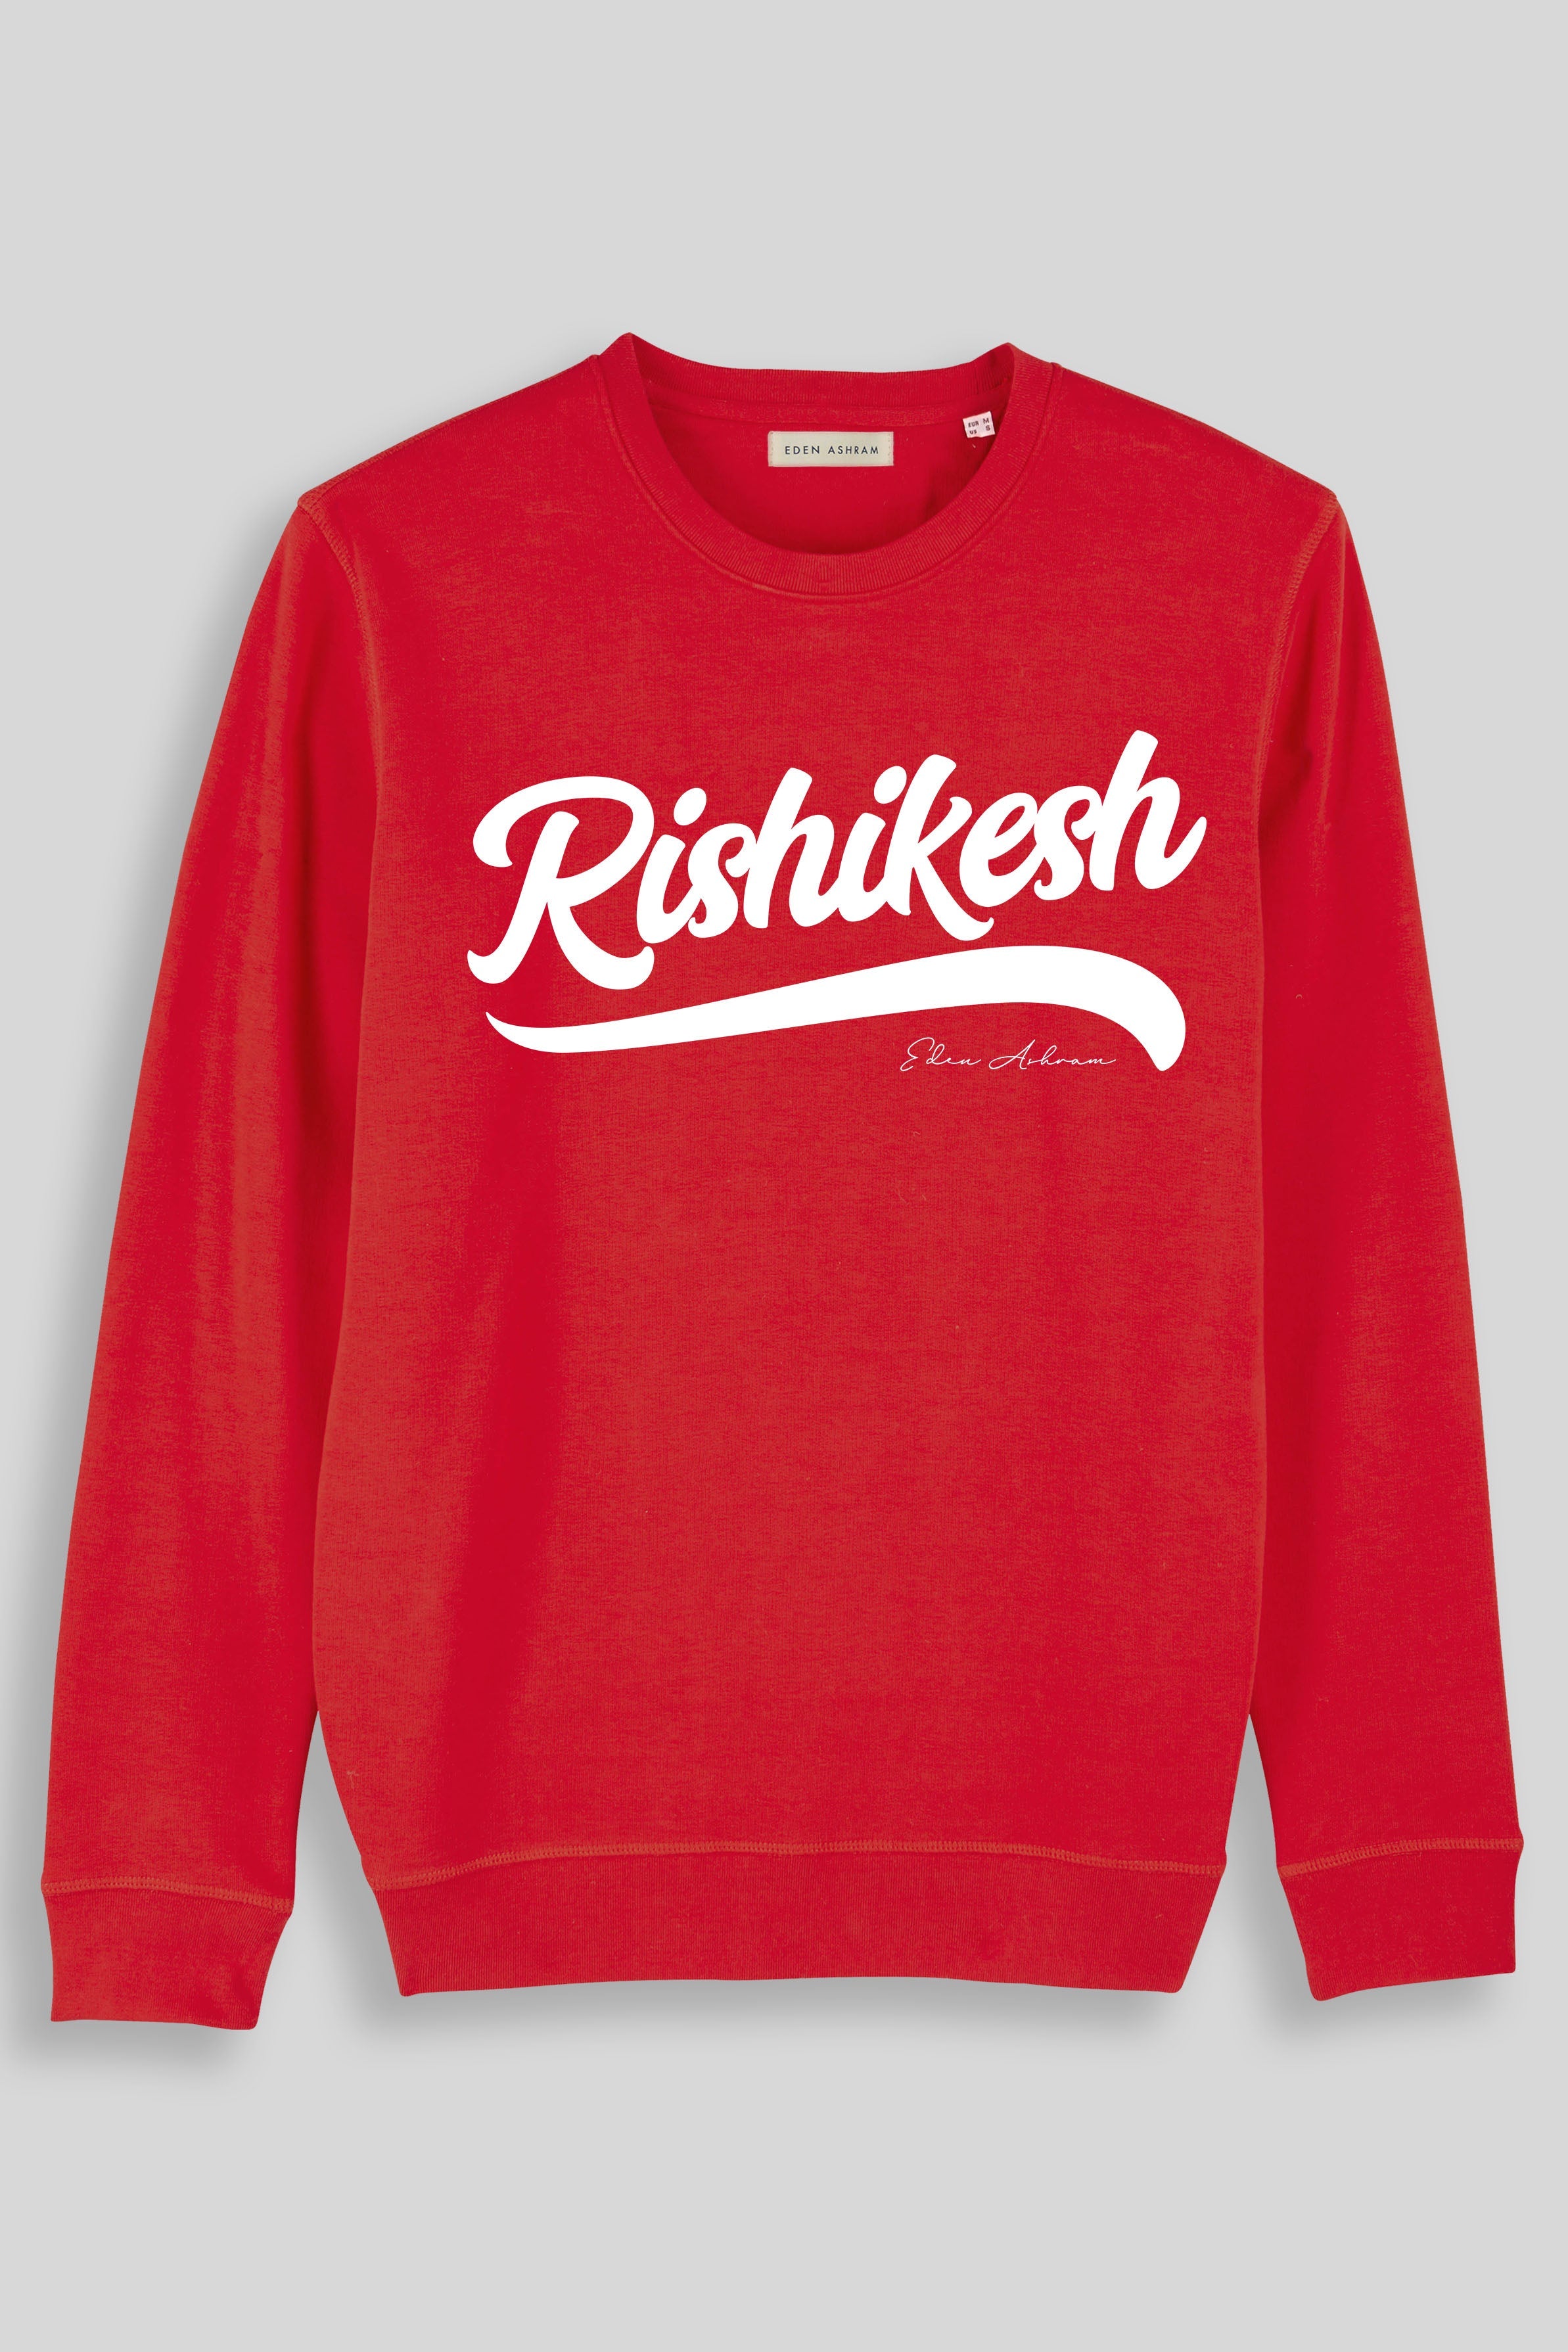 EDEN ASHRAM Rishikesh Premium Organic Crew Neck Sweatshirt Red